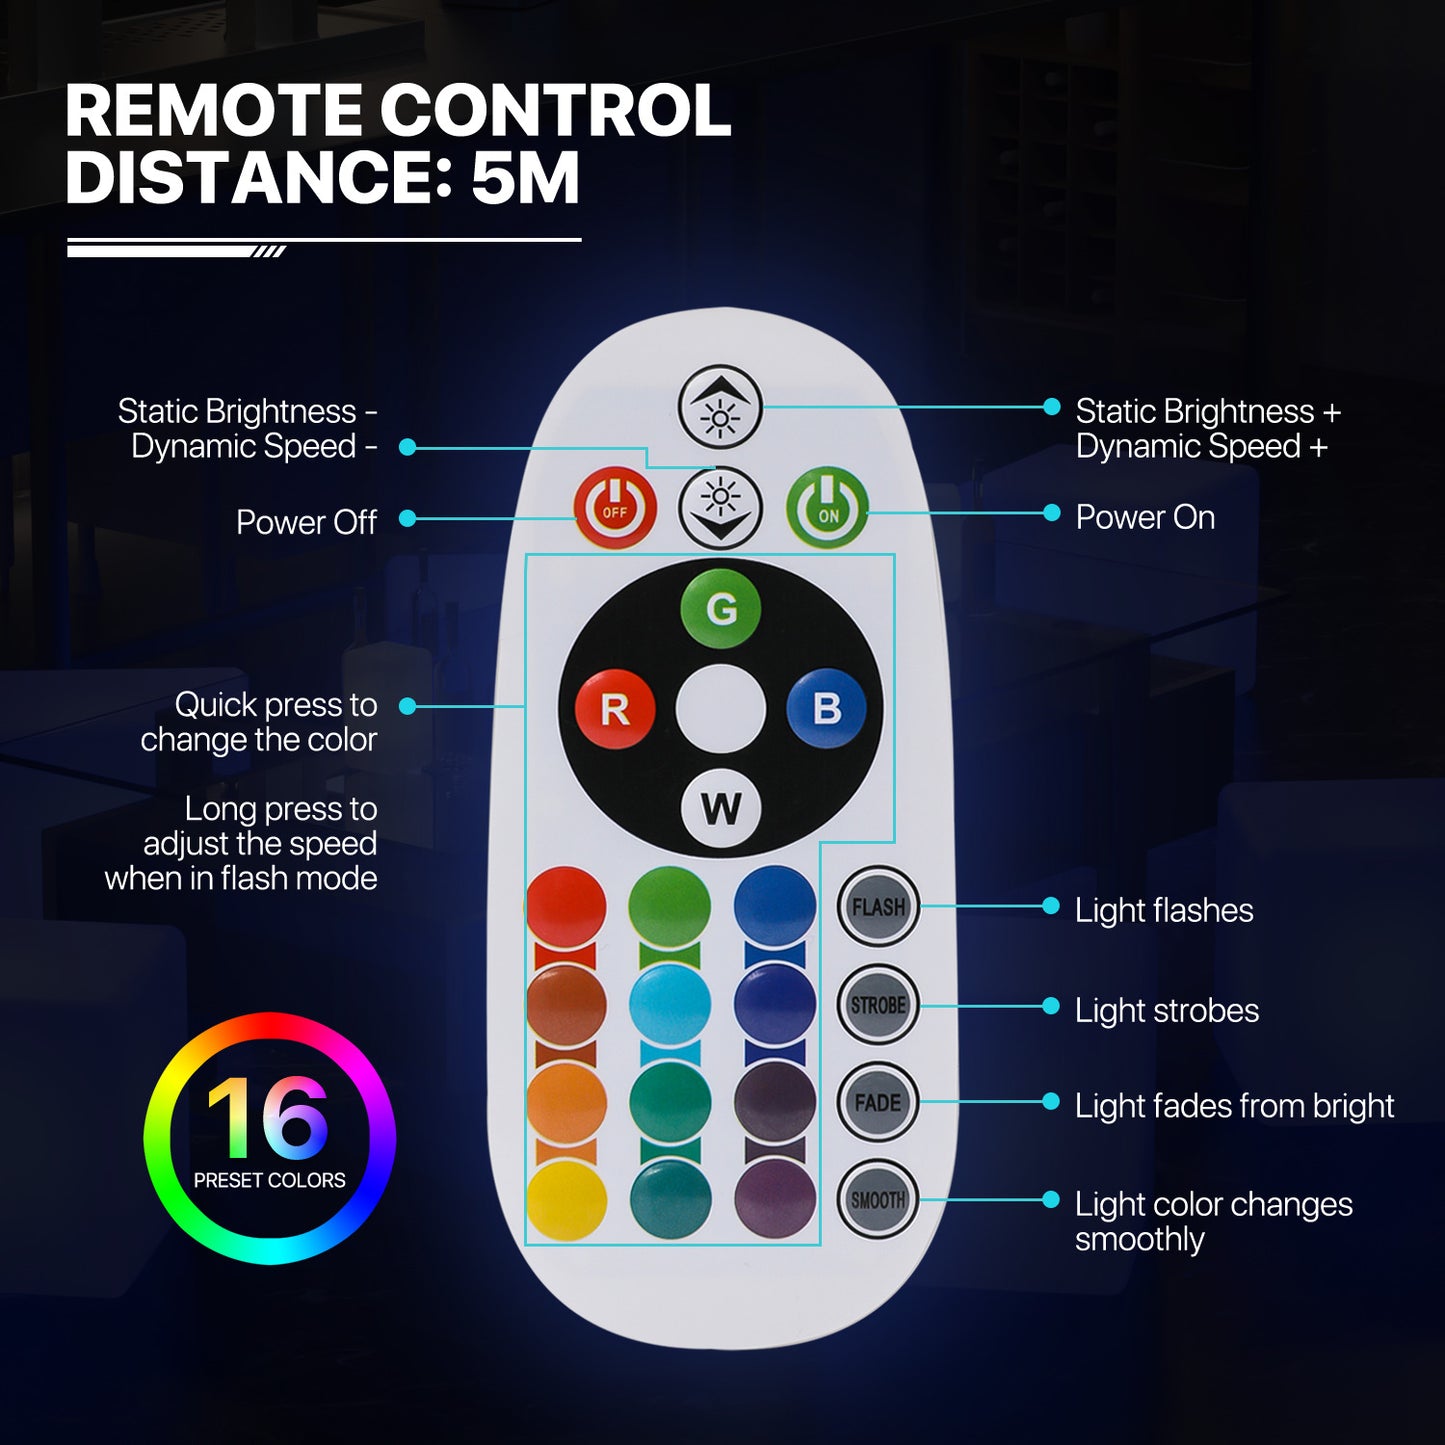 LED - Stool - Egg Shape - 16 Colors Remote Control